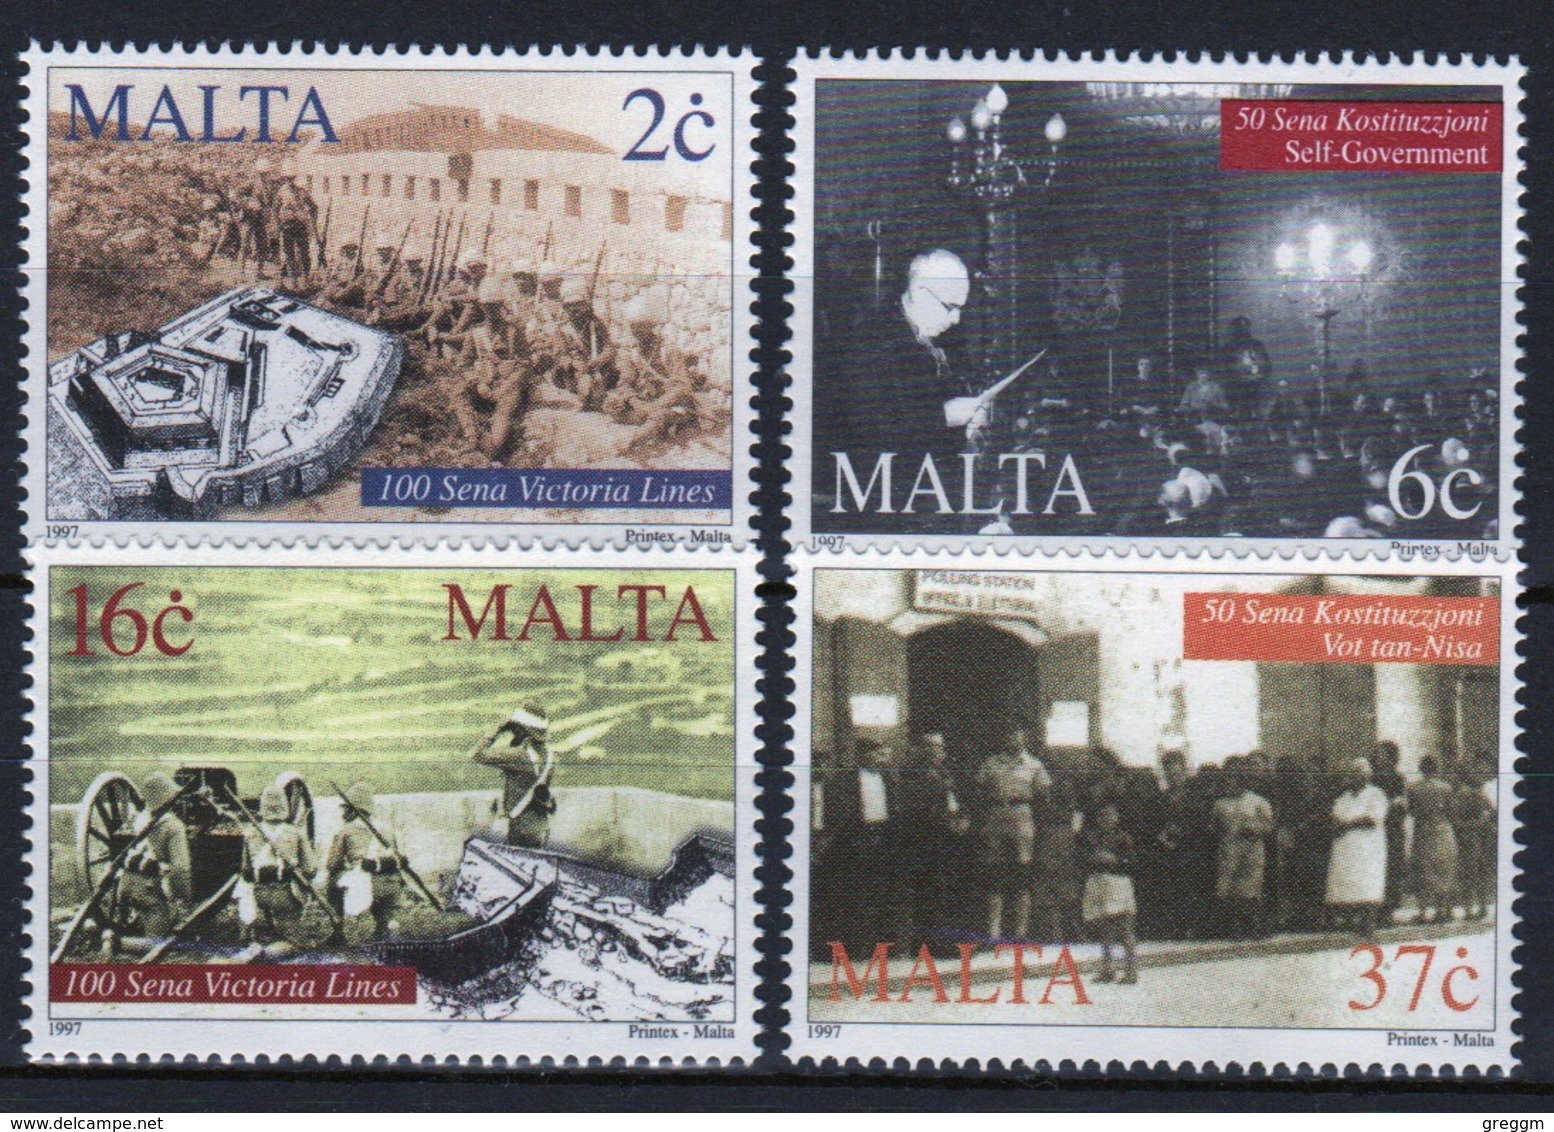 Malta 1997 Set Of Stamps To Celebrate Anniversaries. - Malta